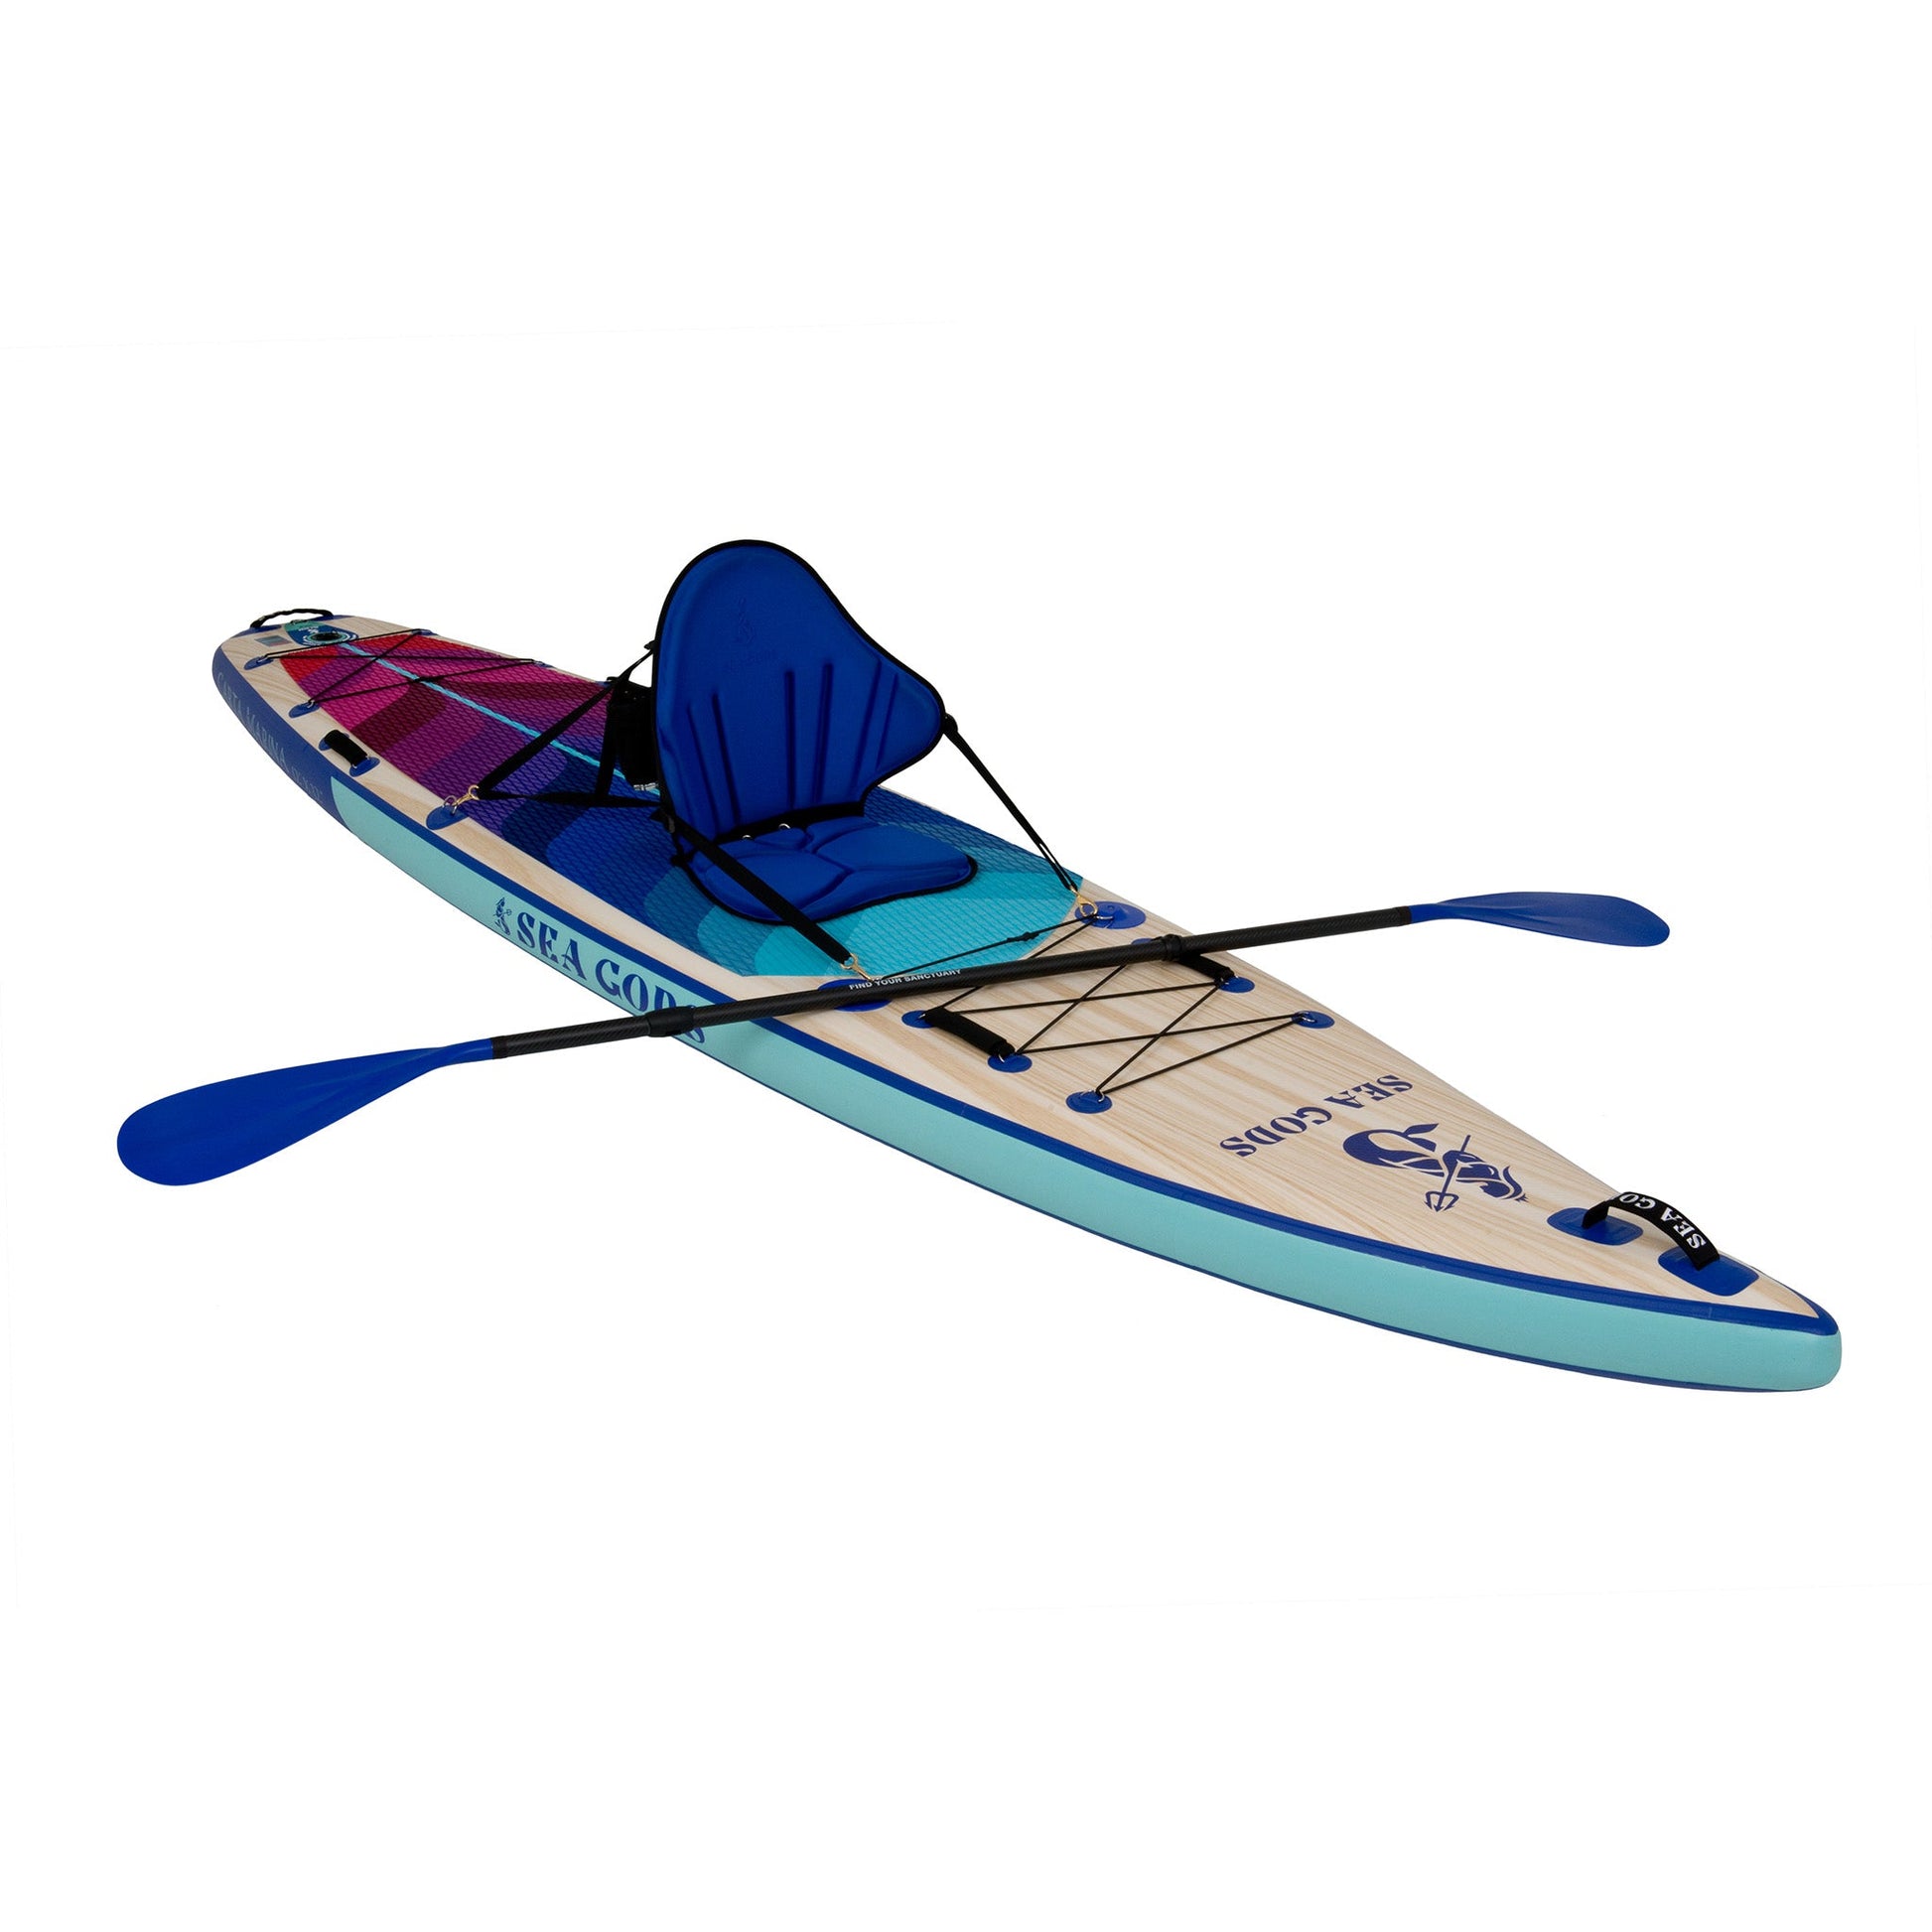 Top Touring iSUP Paddleboard with Kayak Seat - 2022 Carta Marina 